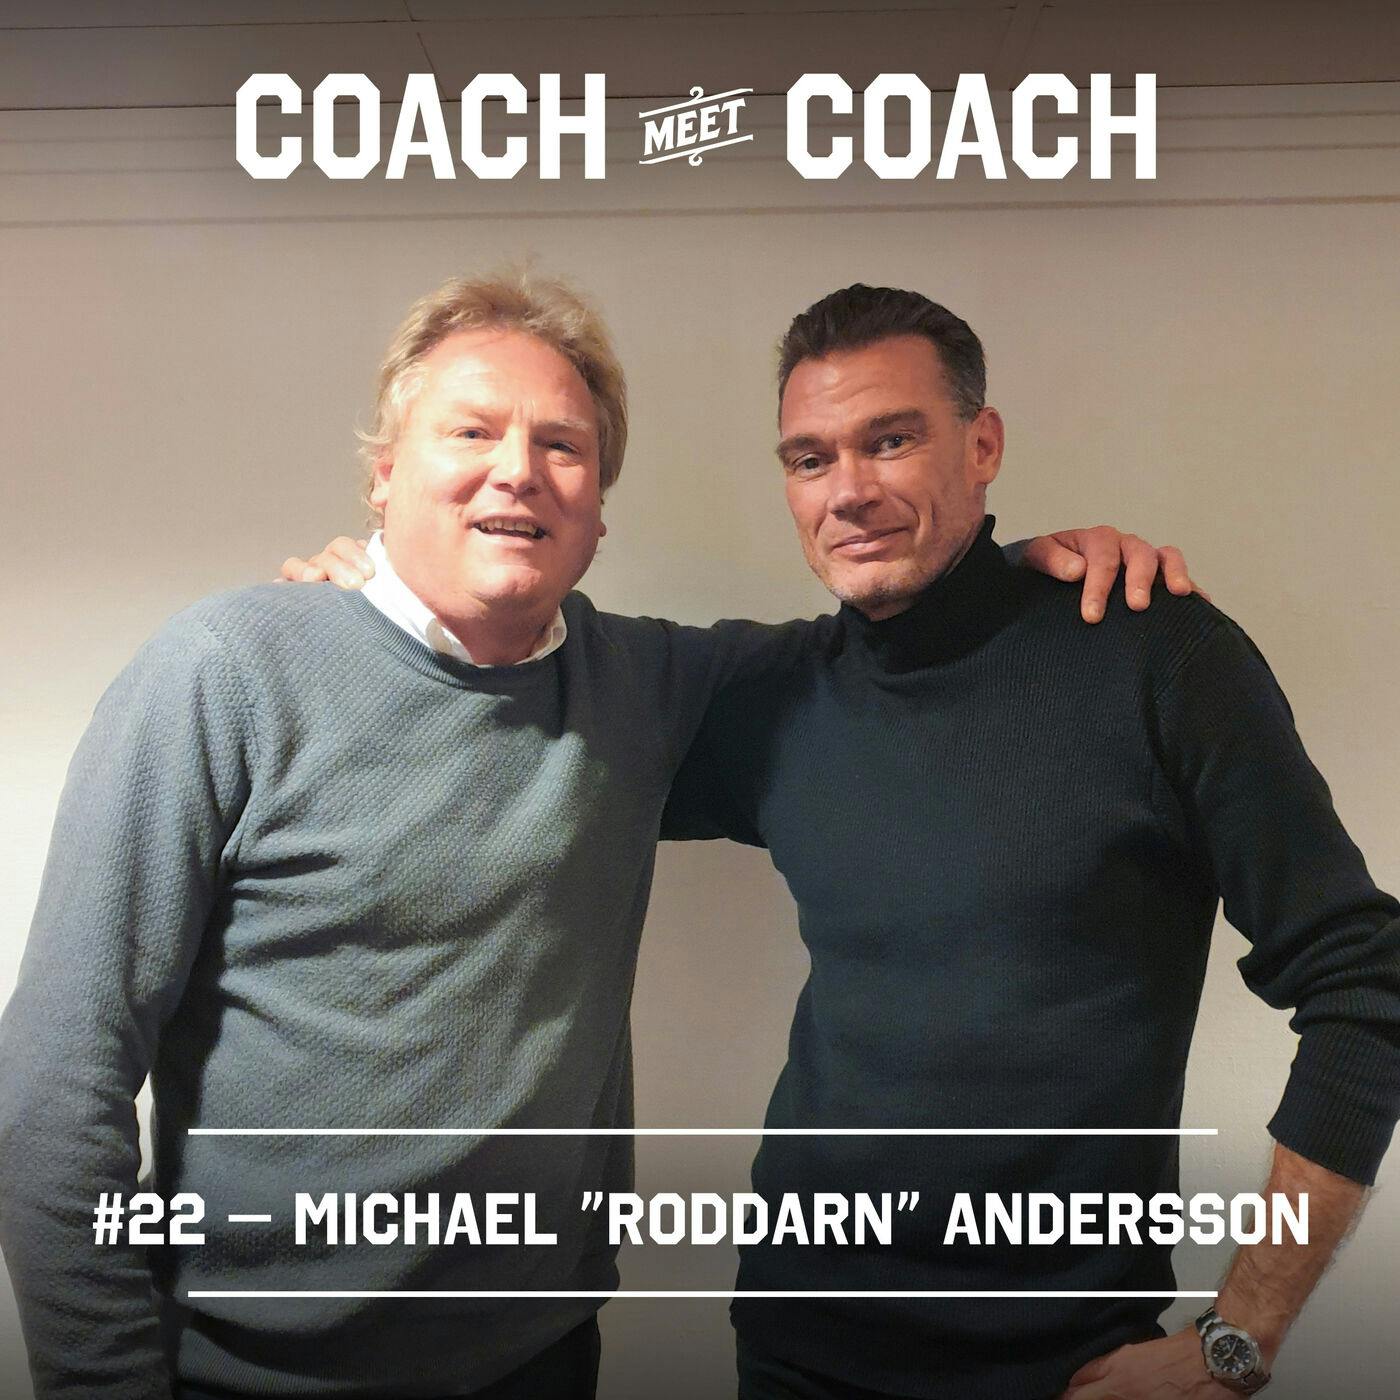 #22 Michael "Roddarn" Andersson